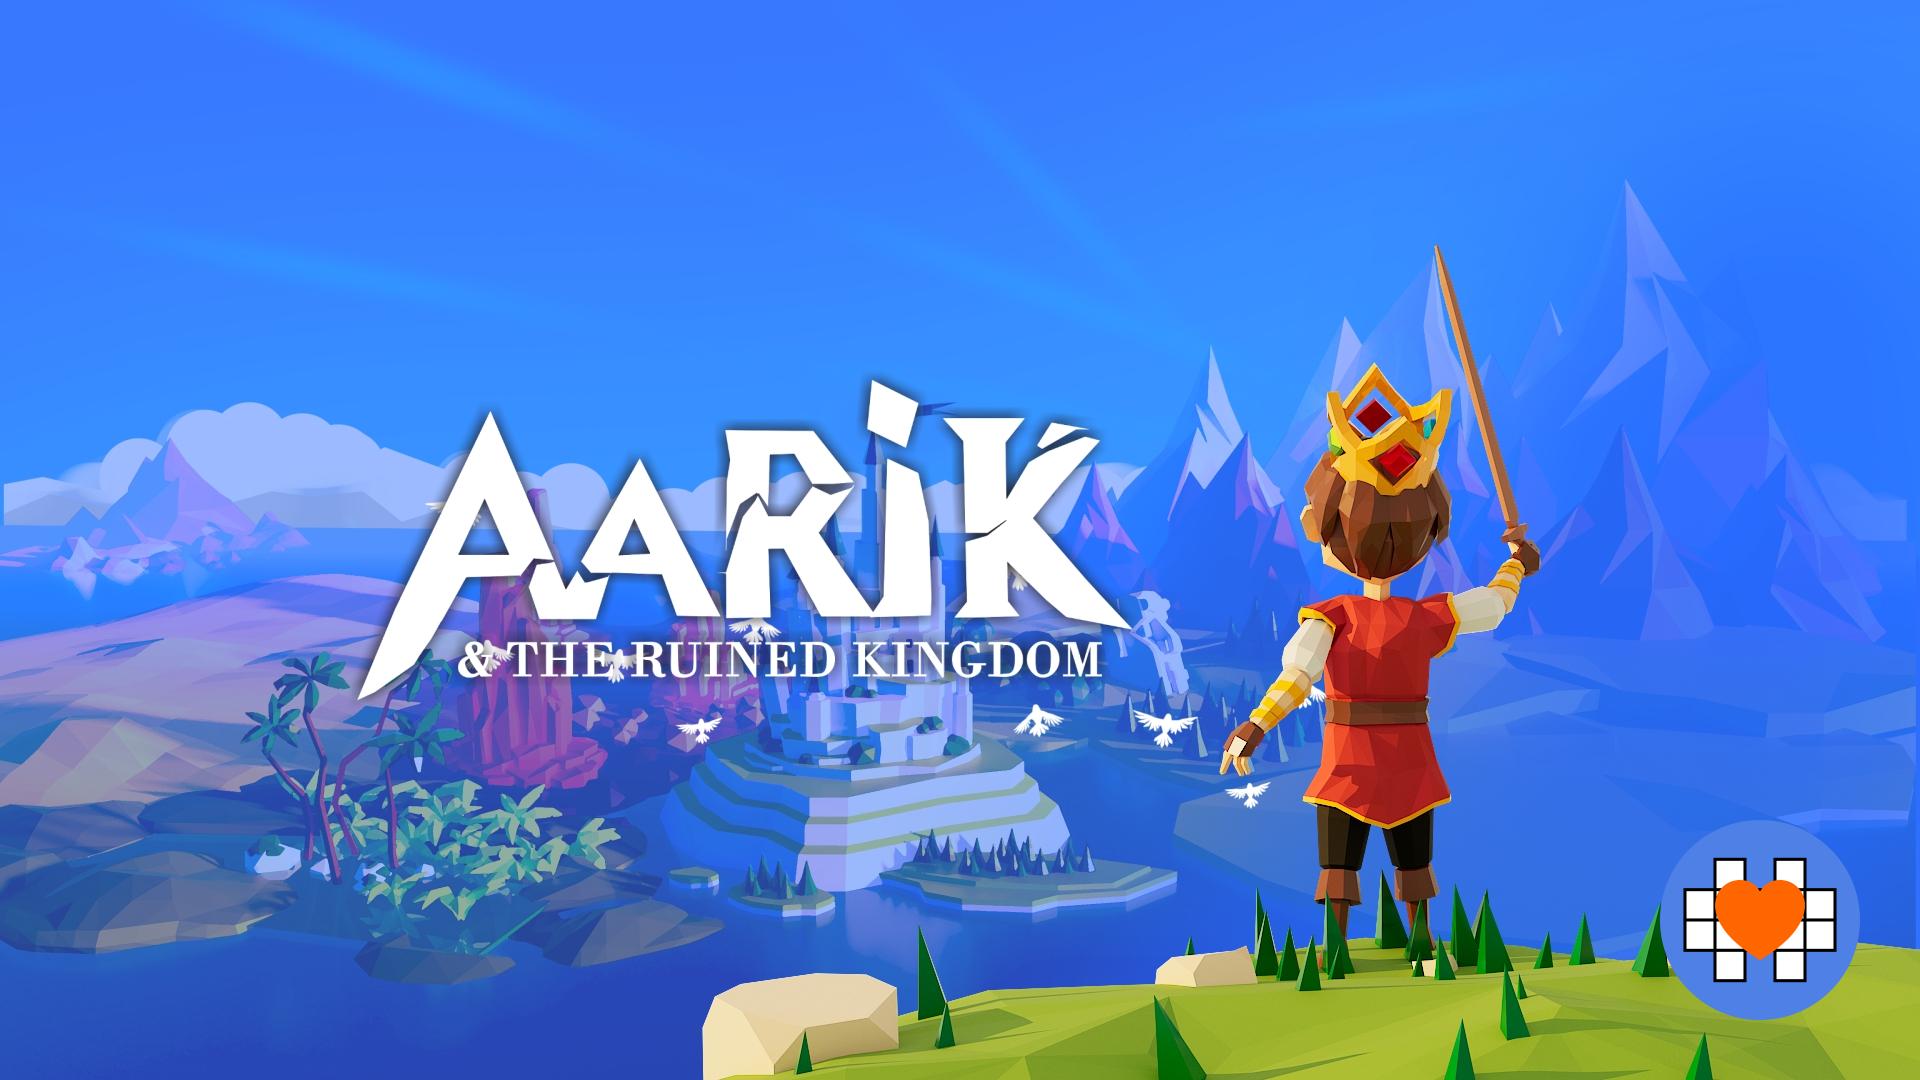 Aarik & The Ruined Kingdom